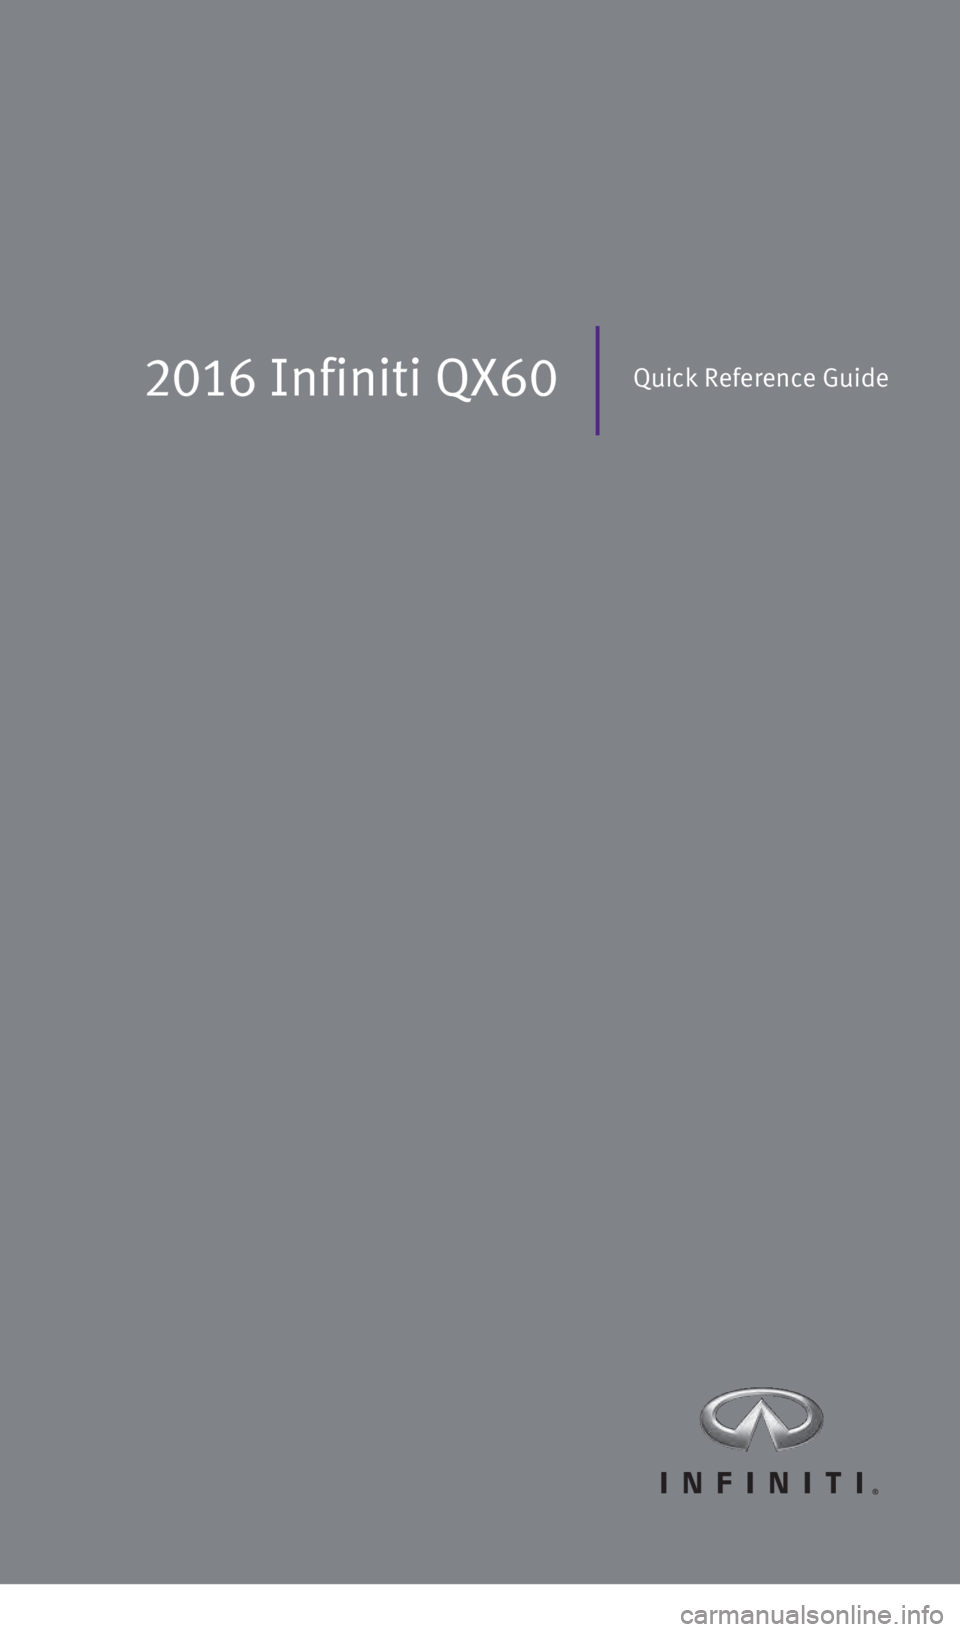 INFINITI QX60 2016  Quick Reference Guide 2016 Infiniti QX60Quick Reference Guide
2460934_16b_Infiniti_QX60_QRG_031716_b.indd   33/17/16   2:15 PM 